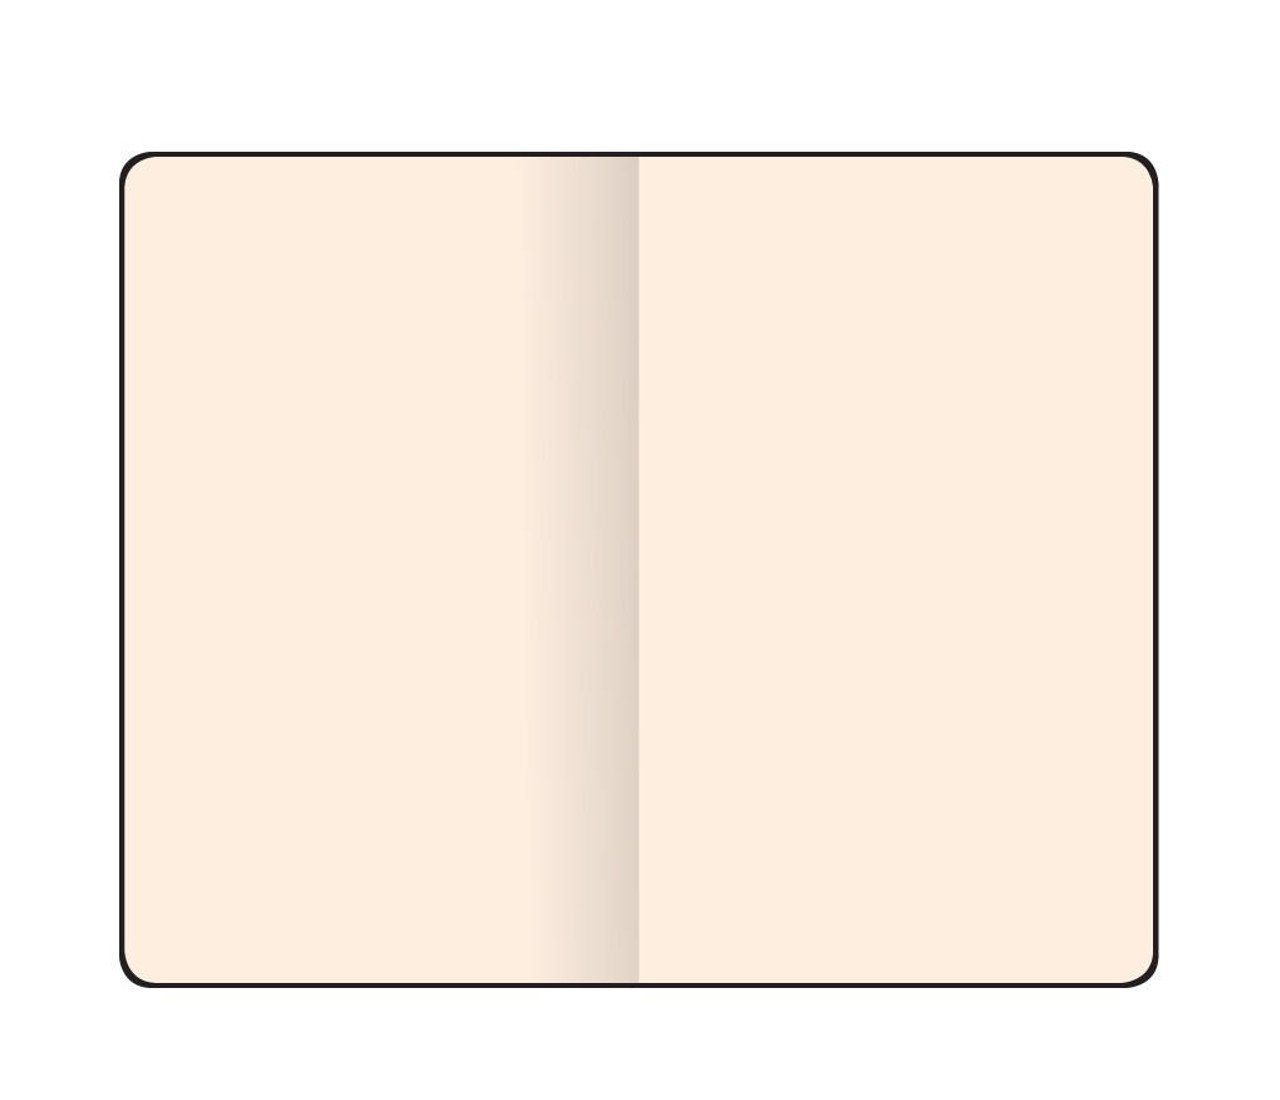 Flexbook Notizbuch blanko/linierte verschied Blanko / 9 * Rot Notizbuch cm Seiten / 14 Elastikband Flexbook Globel